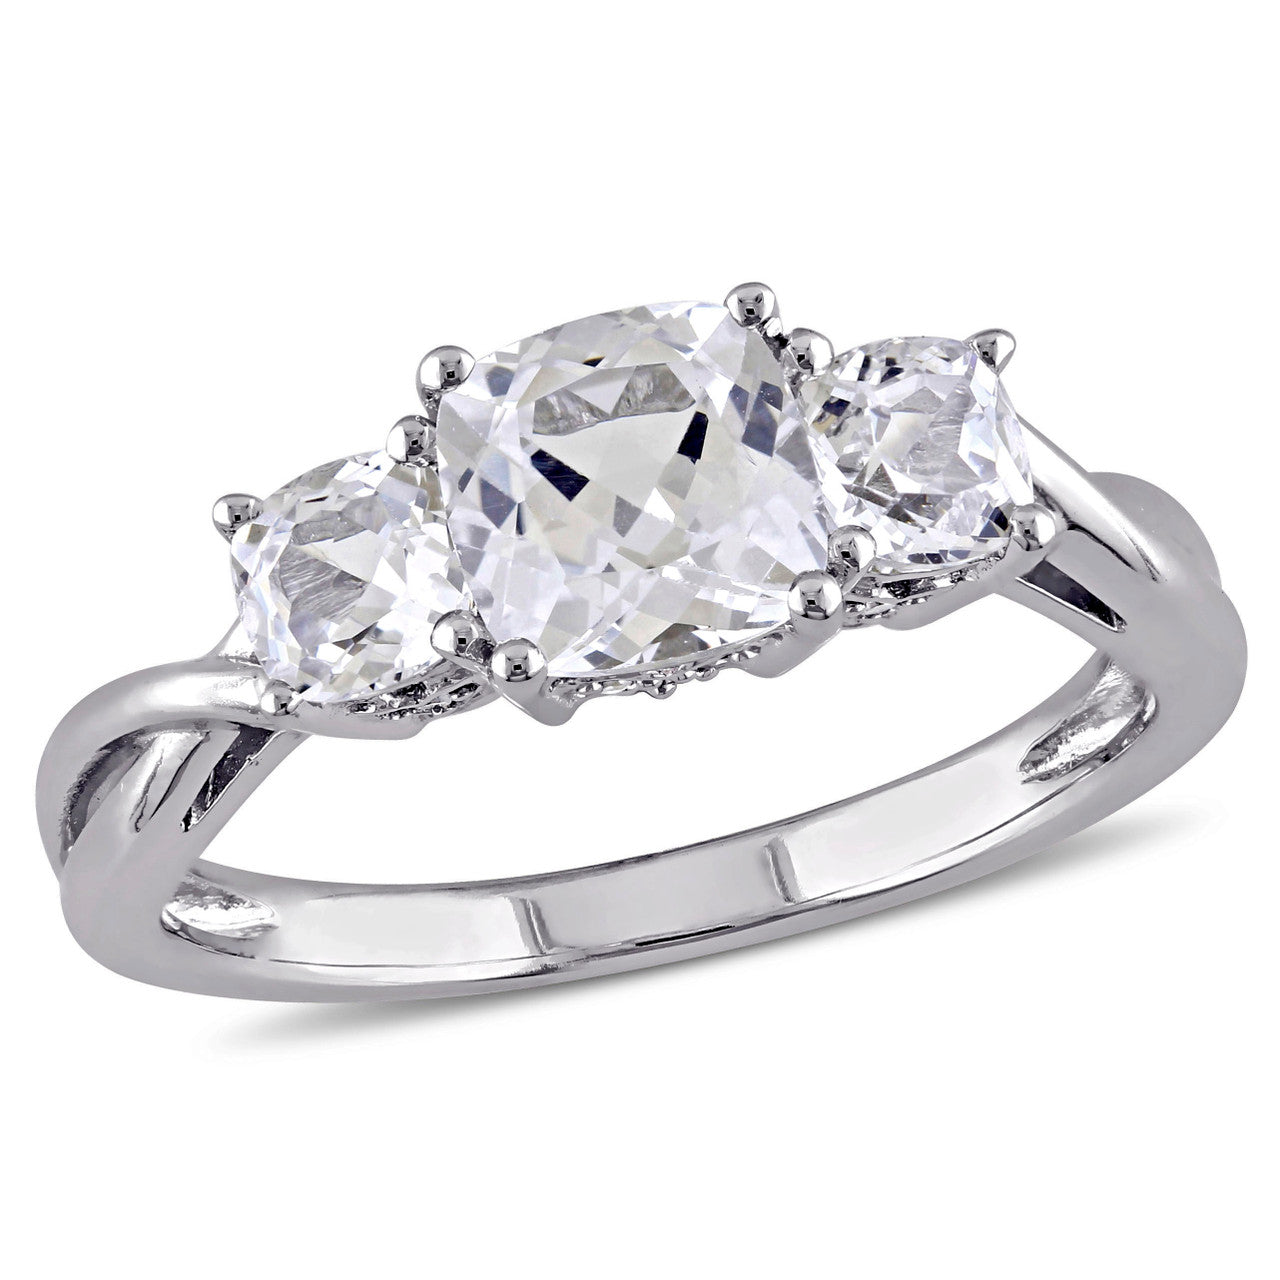 Ice Jewellery 0.04 CT Diamond TW and 2 CT TGW Created White Sapphire Ring in 10k White Gold - 75000004660 | Ice Jewellery Australia